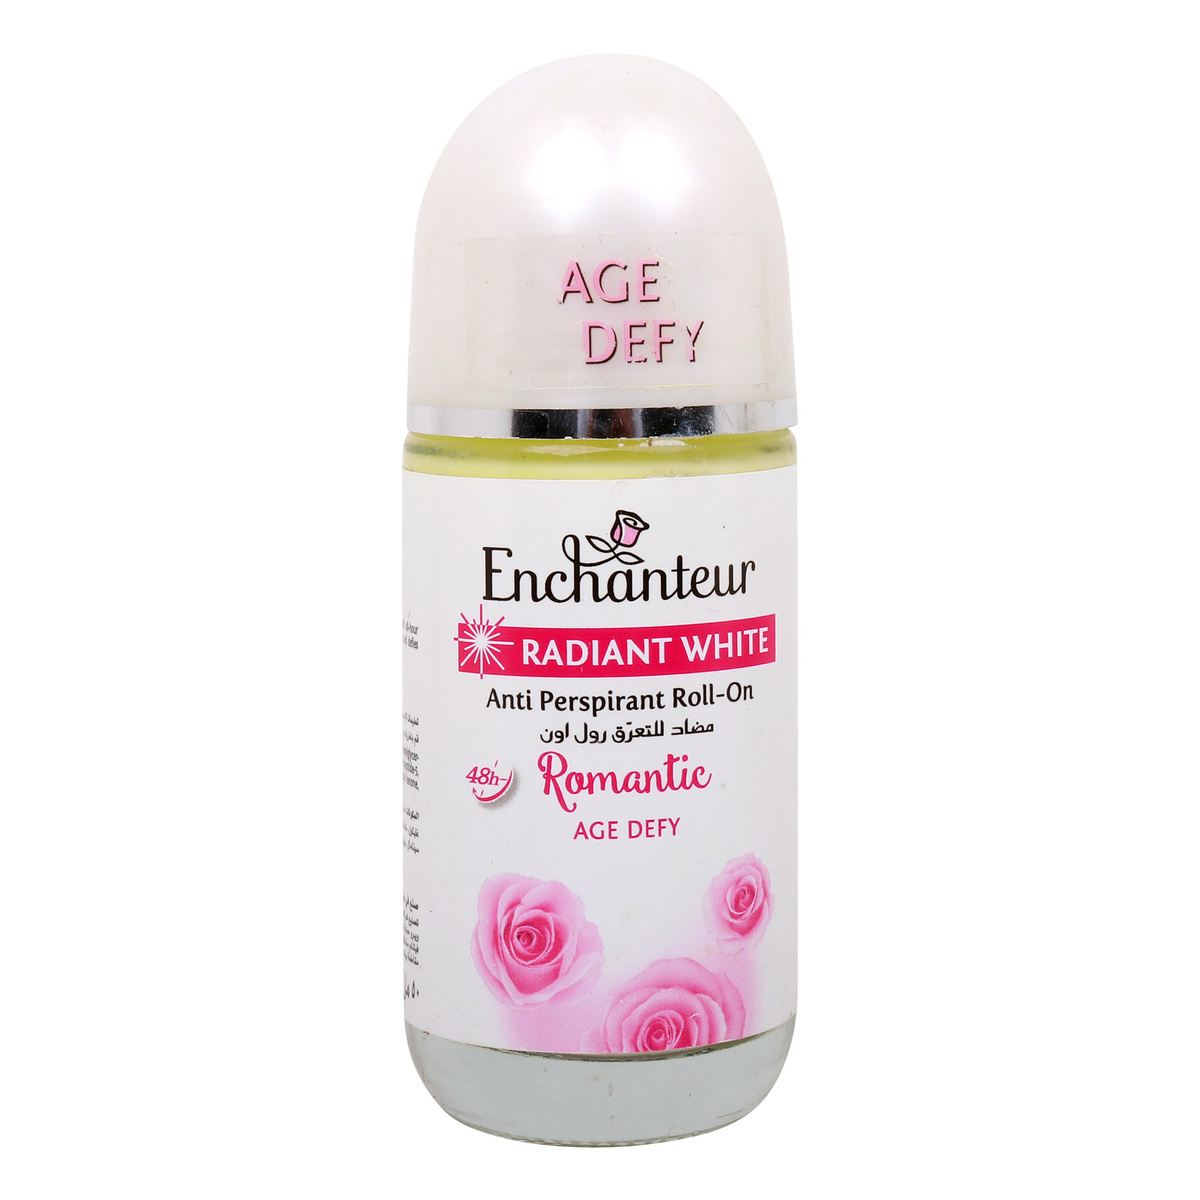 Enchanteur Romantic Age Defy Anti-Perspirant Roll-On, 50 ml